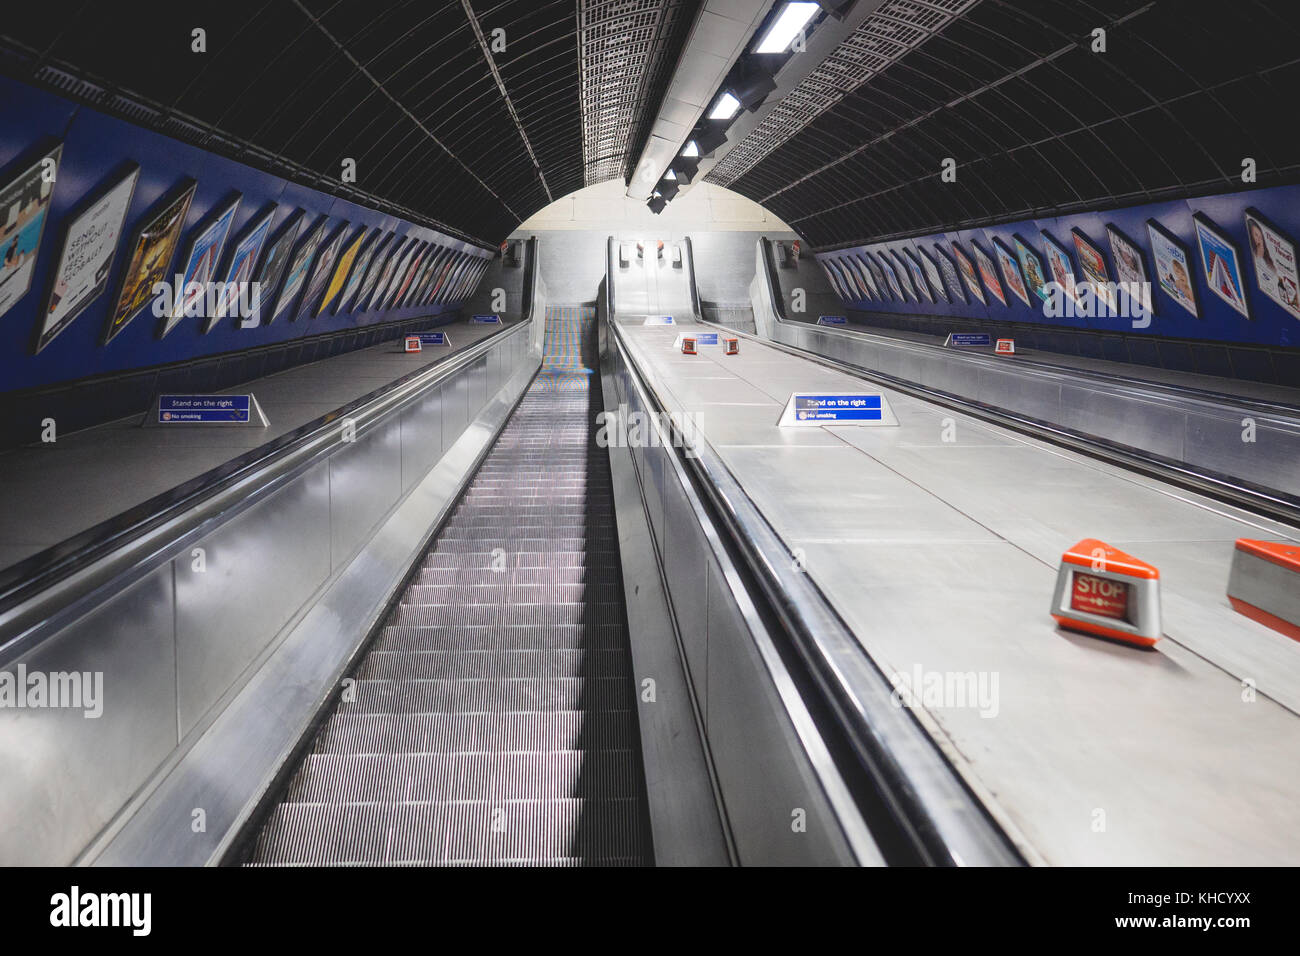 Empty Underground escalators in London Bridge station. London, 2017. Landscape format. Stock Photo